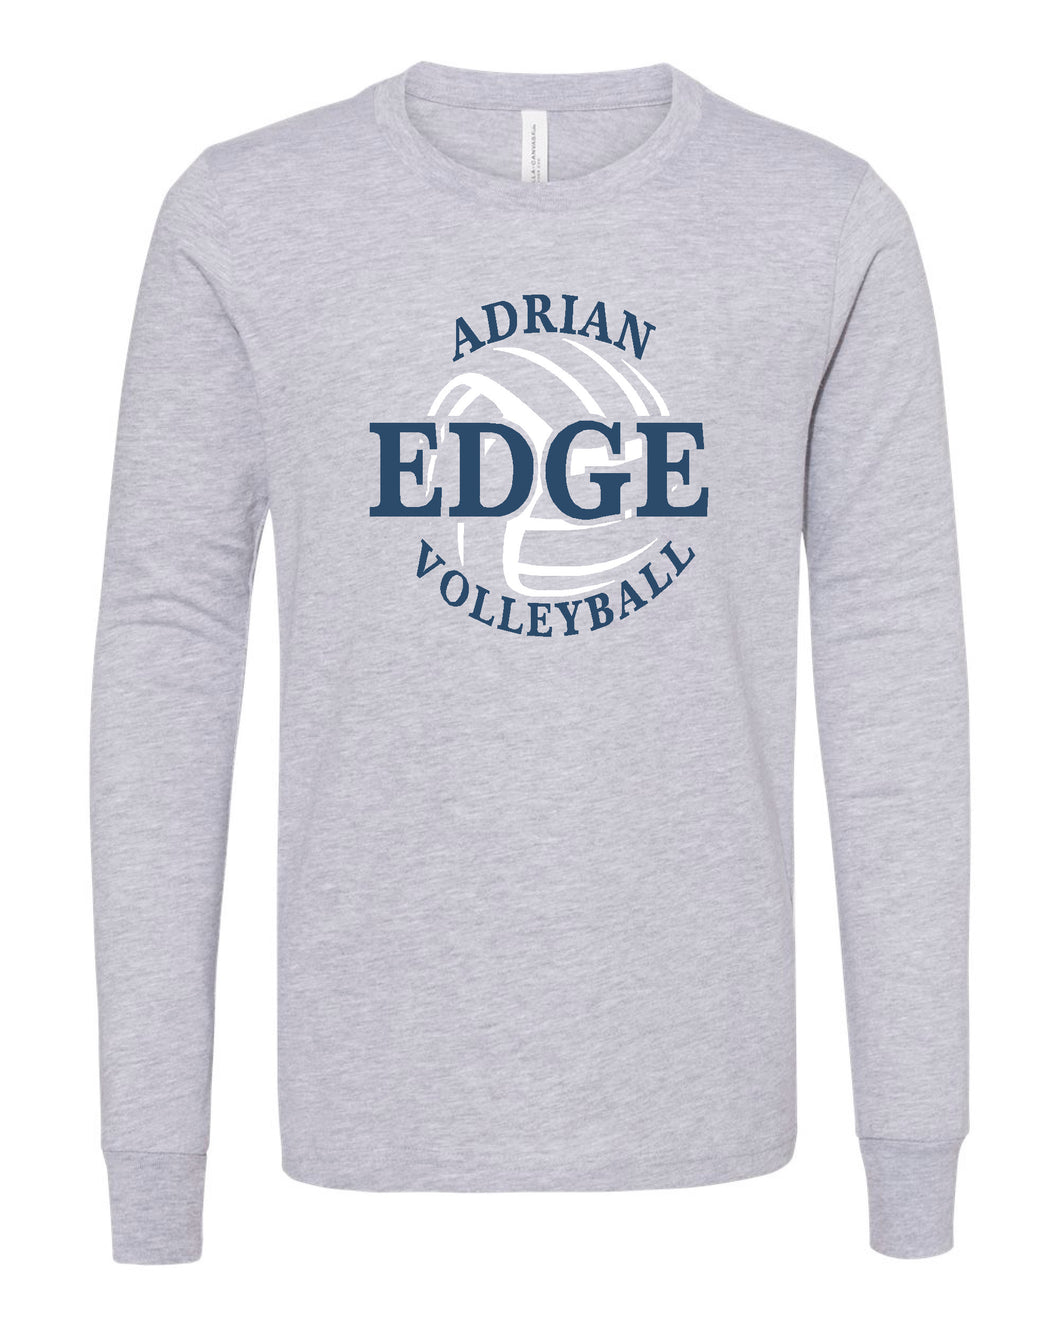 ADRIAN EDGE VOLLEYBALL Bella + Canvas - Unisex Long Sleeve Tee-GREY